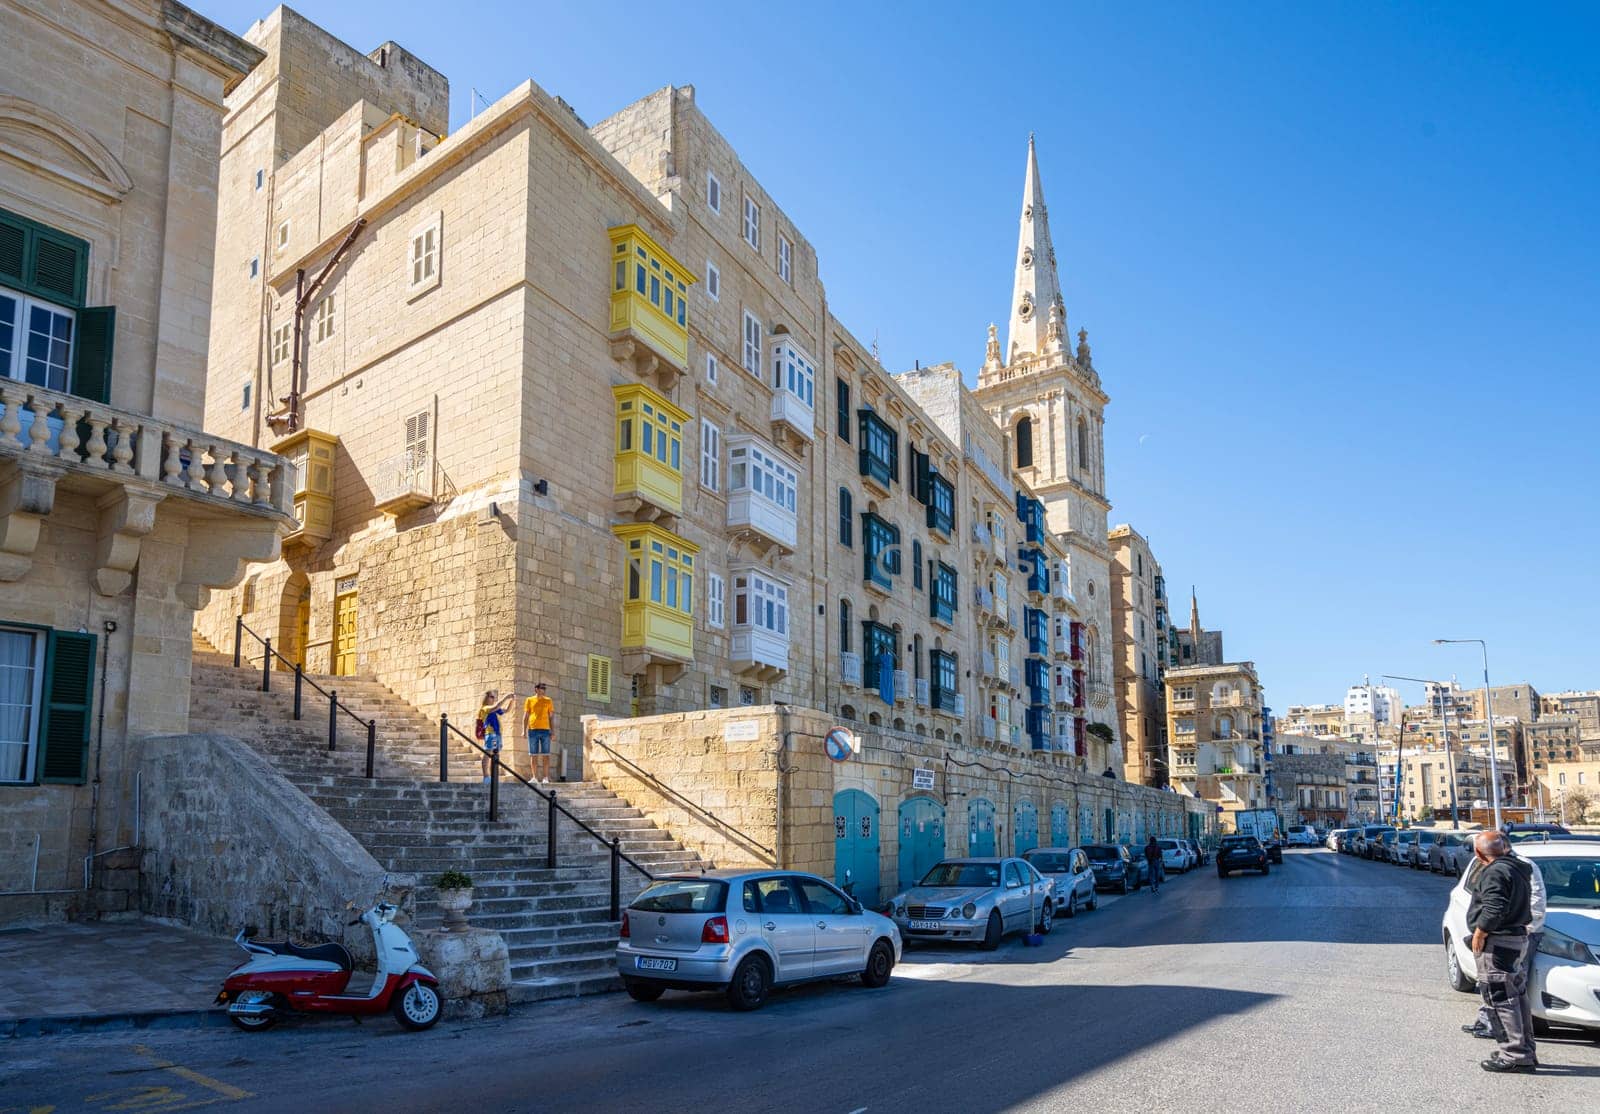 typical wooden balconies in Valletta, Malta by sergiodv